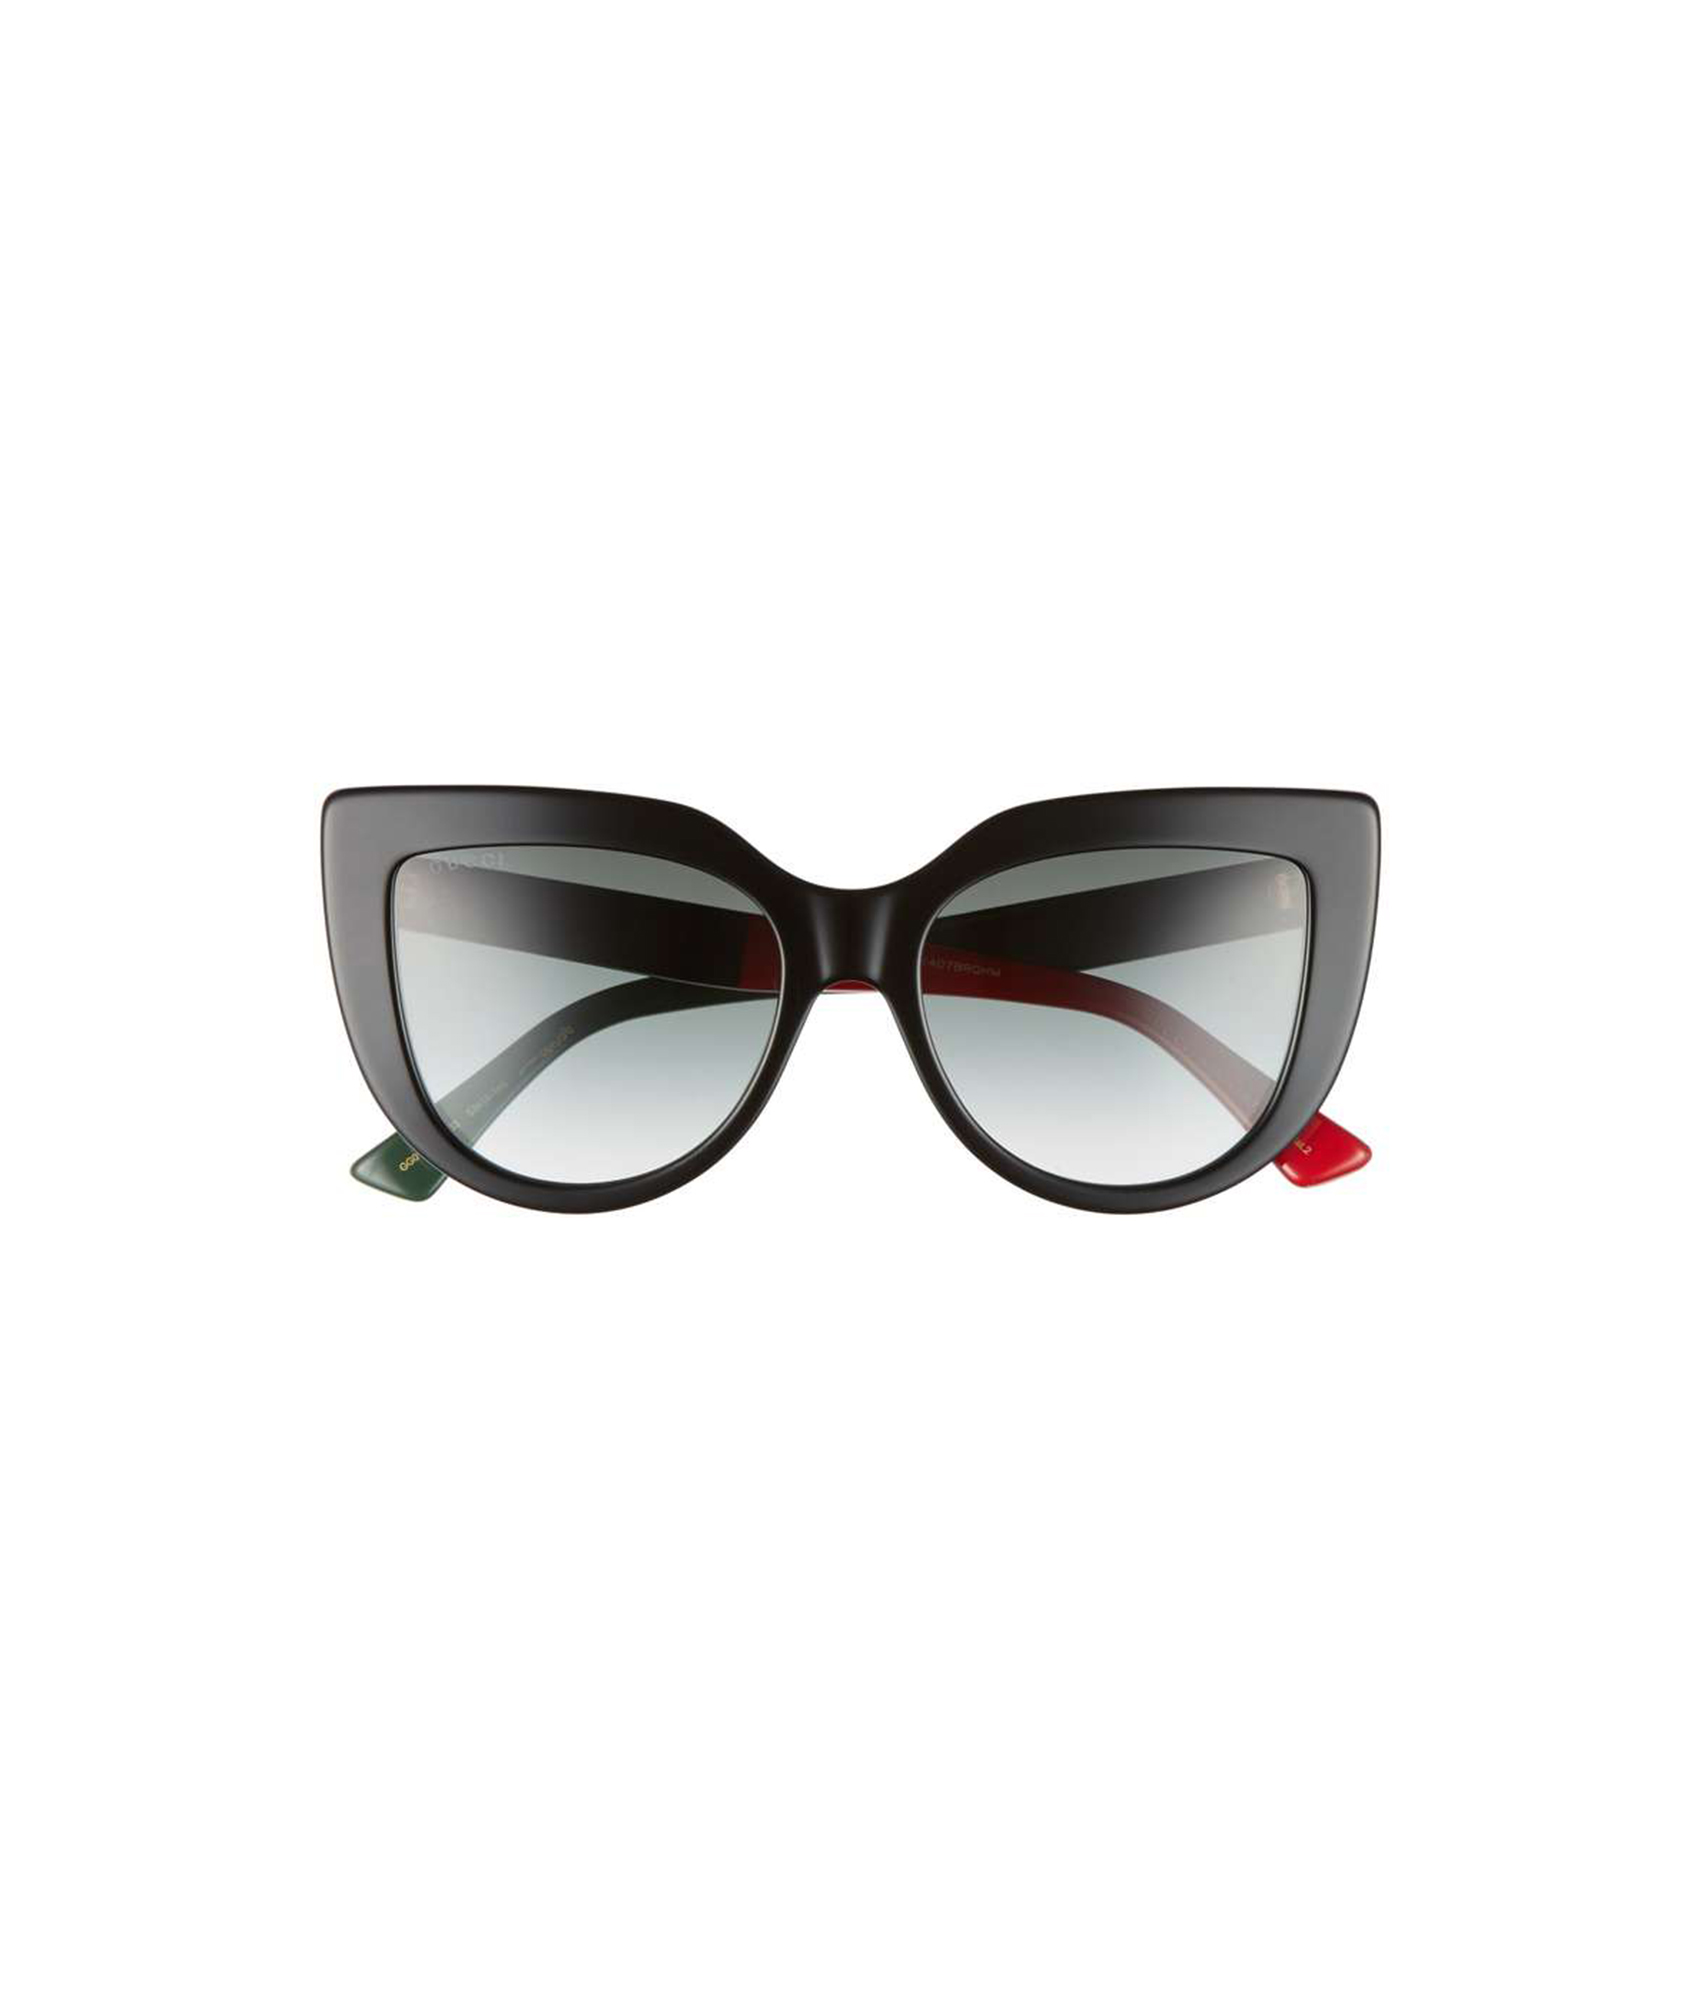 Designer Items Worth The Splurge | Gucci Sunglasses | Blondie in the City by Hayley Larue